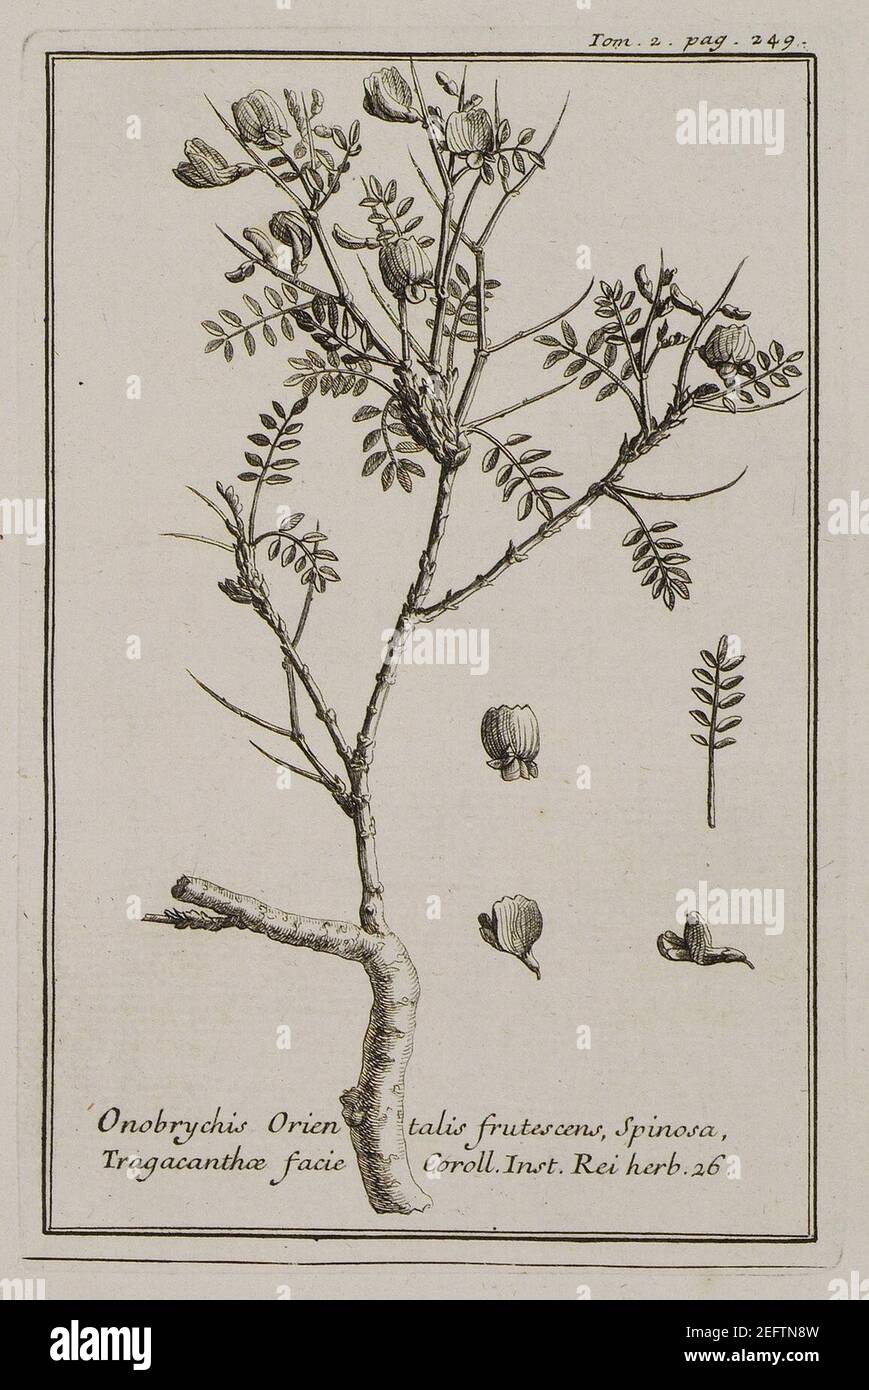 Onobrychis Orientalis frutescens, Spinosa, Tragacanthae facie Coroll Inst Rei herb 26 - Tournefort Joseph Pitton De - 1717. Stock Photo